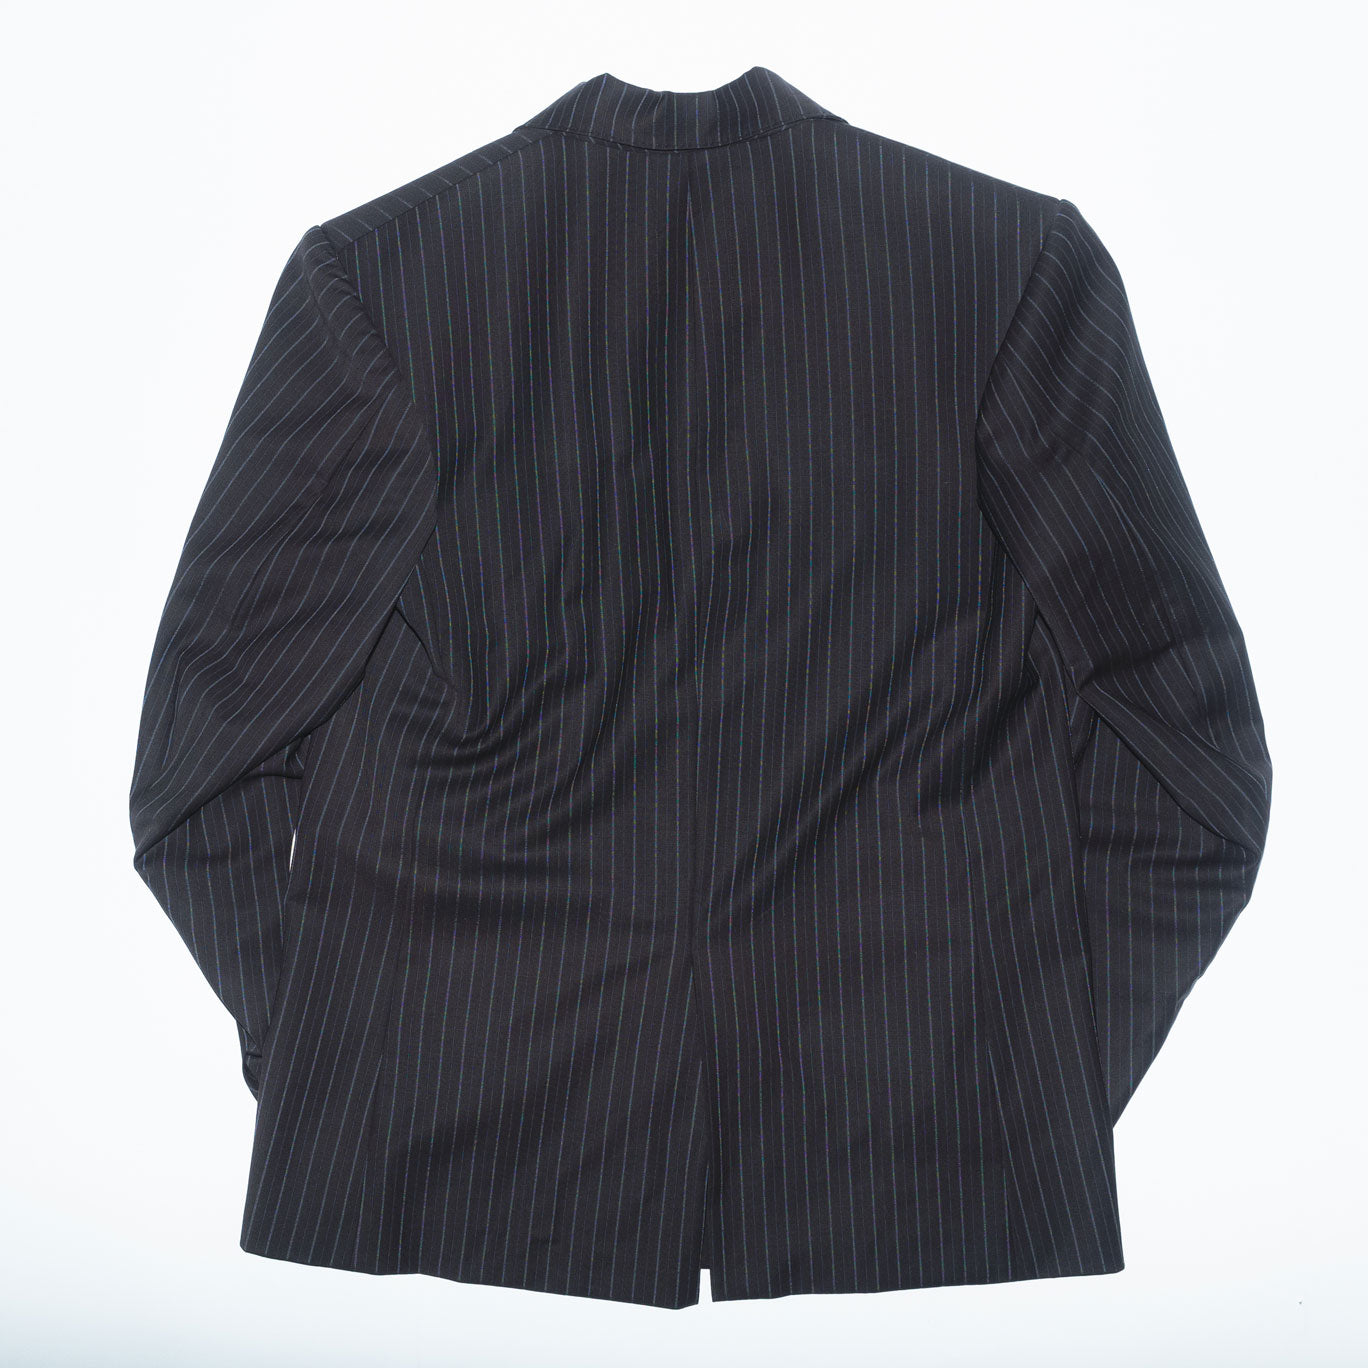 Archive Tempre Suit Jacket in Coffee Pinstripe Wool